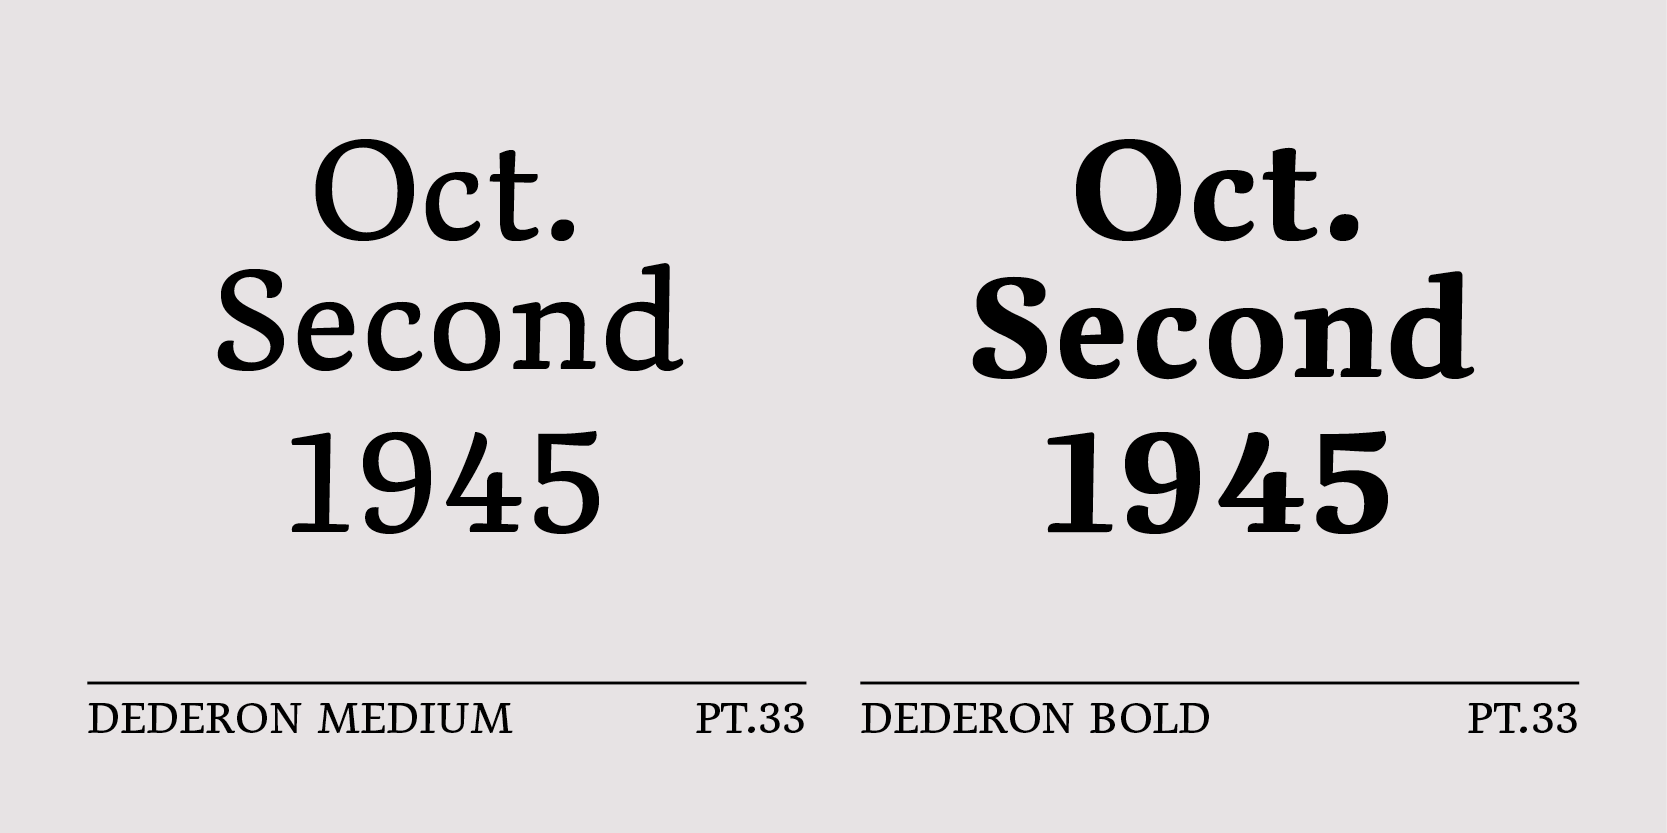 Card displaying Dederon typeface in various styles